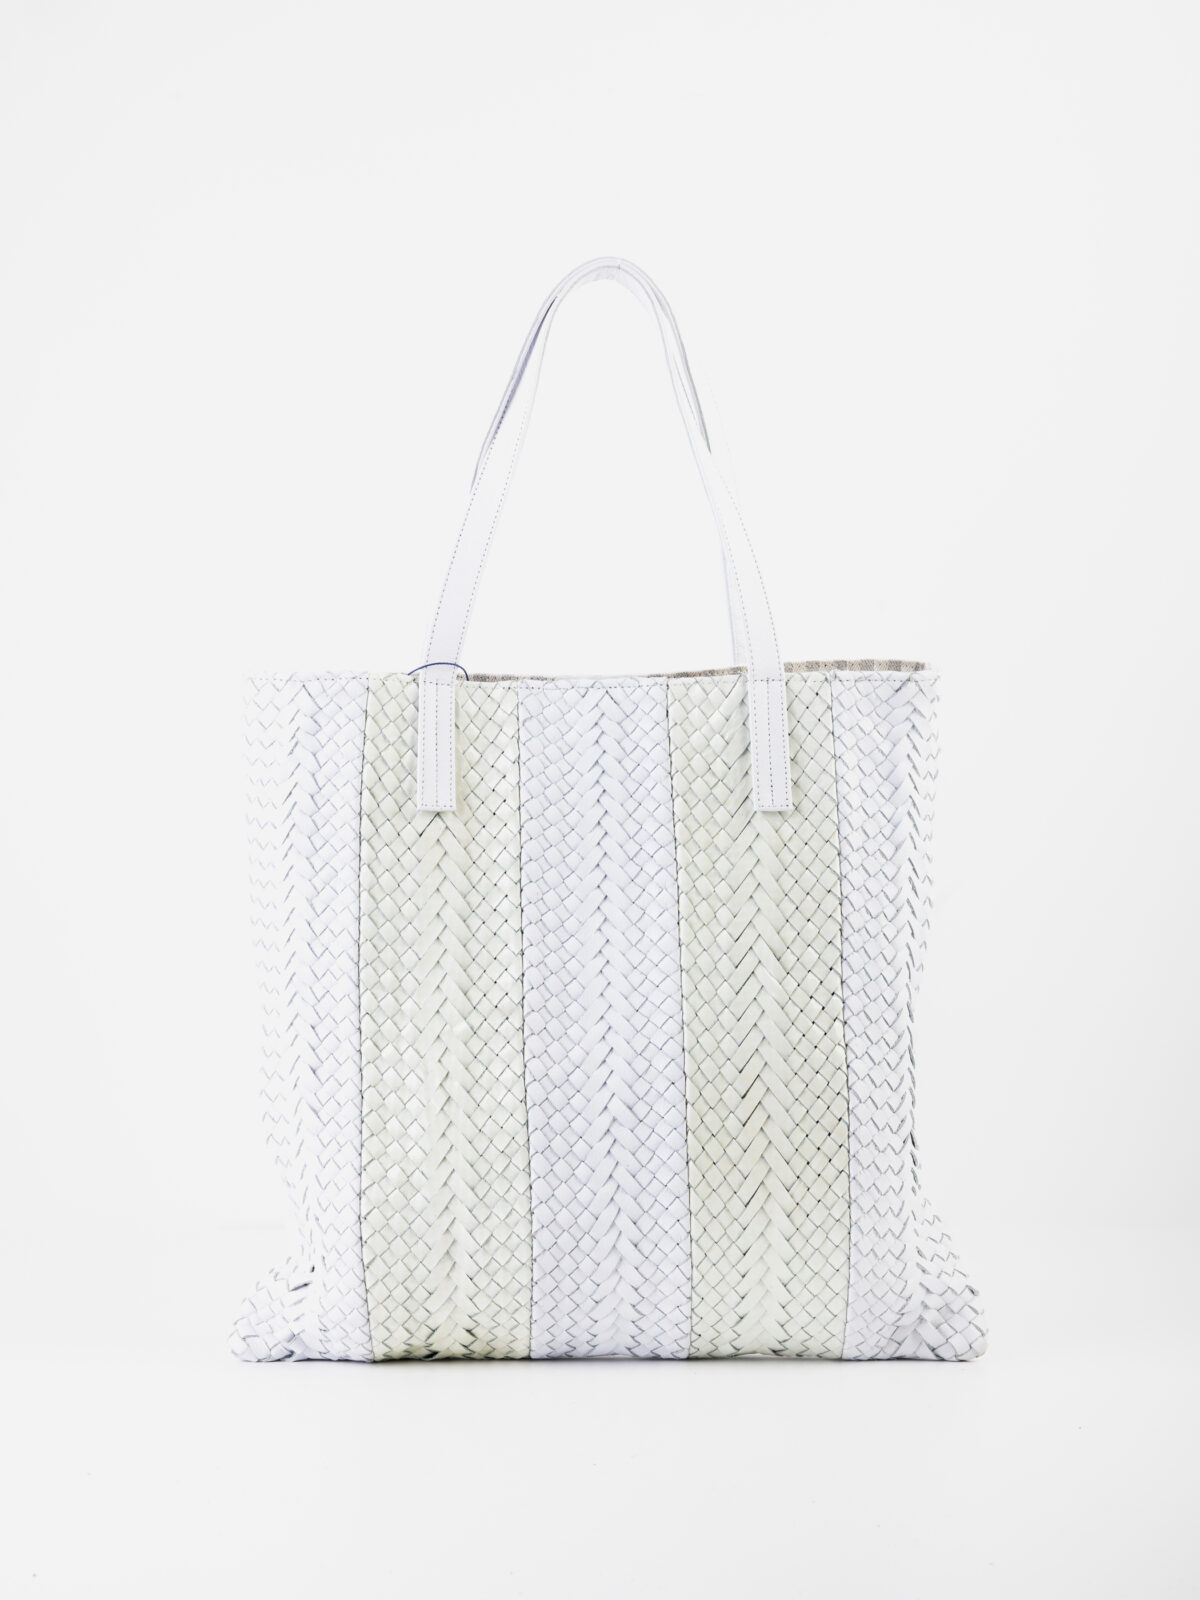 lola-white-tote-leather-weaved-bag-shiny-mat-handmade-claramonte-matchboxathens